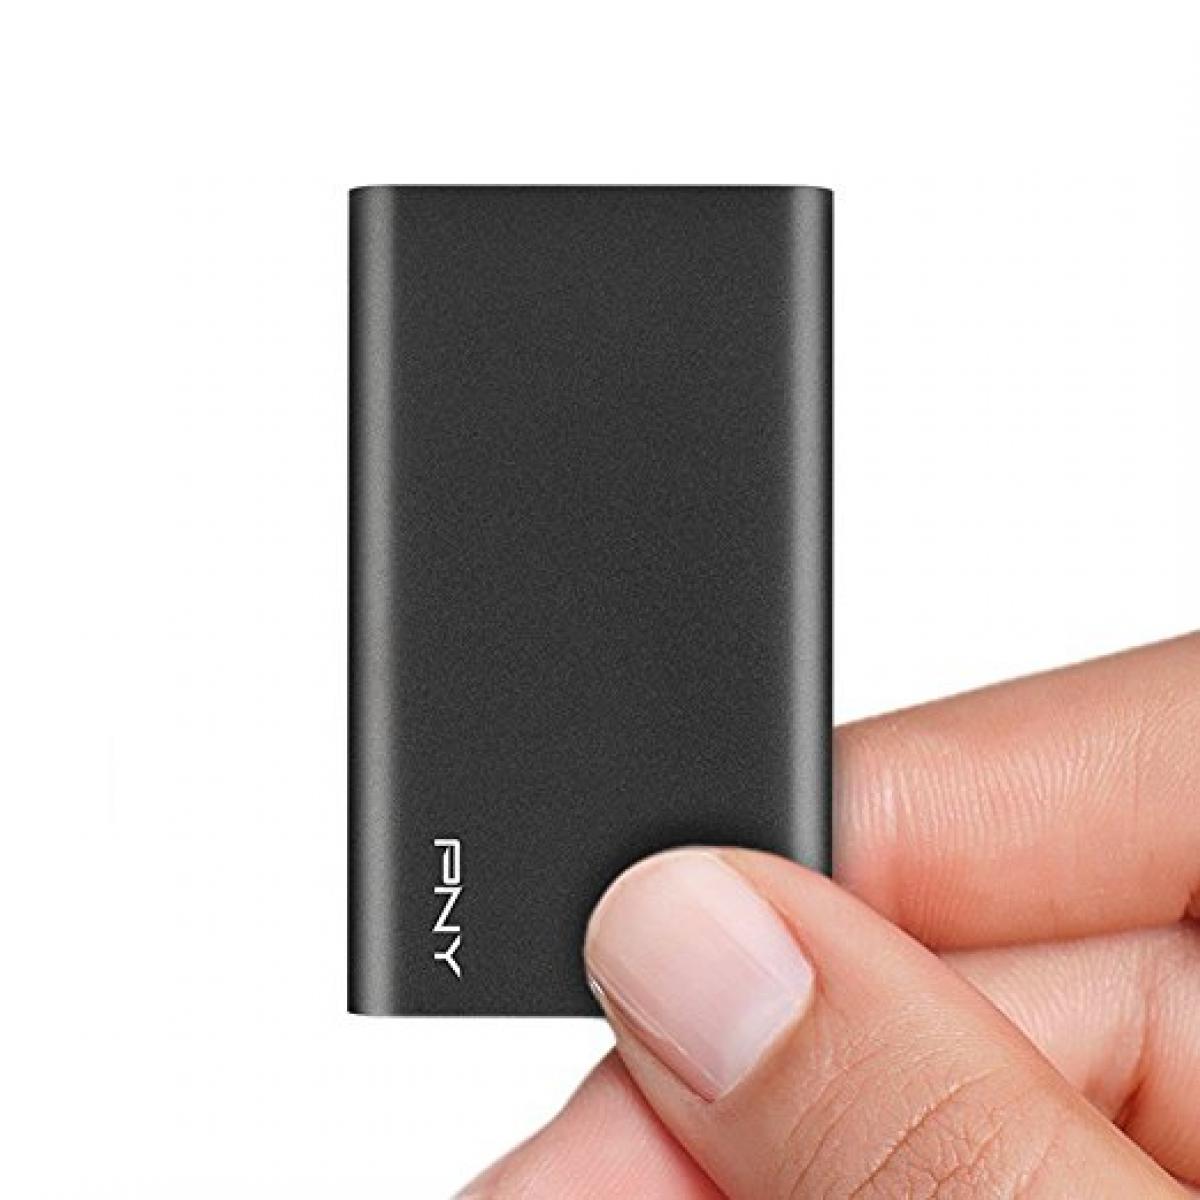 PNY Elite 240GB USB 3.0 Portable SSD